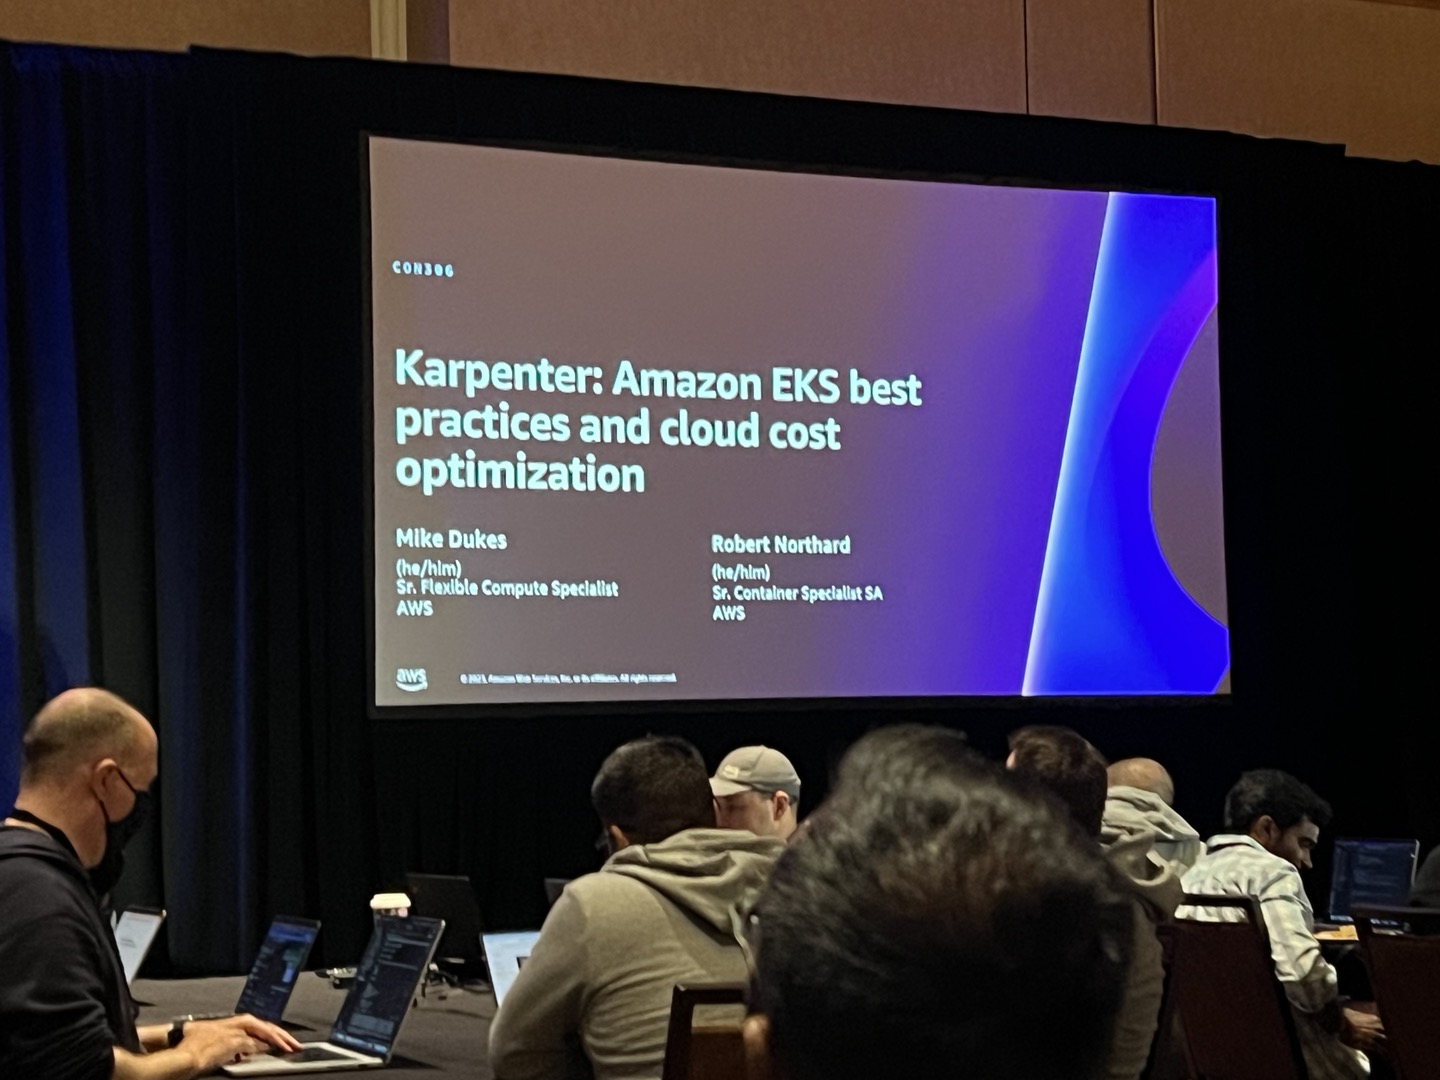 Karpenter：Amazon EKS best practices and cloud cost optimization